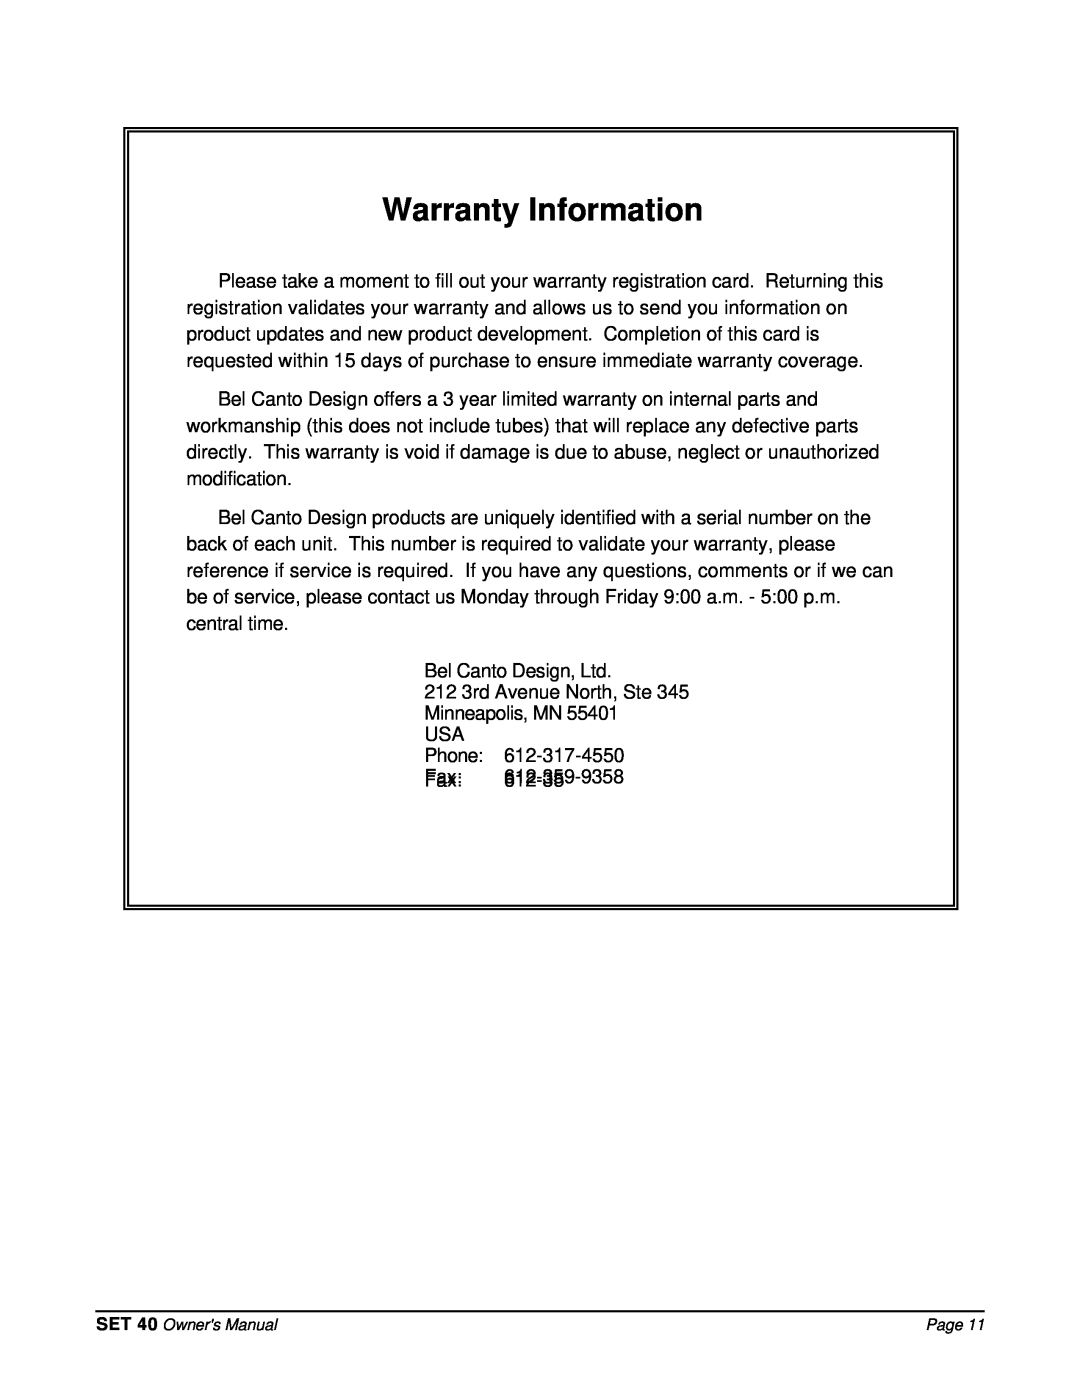 Bel Canto Design SET 40 manual Warranty Information, Fax 